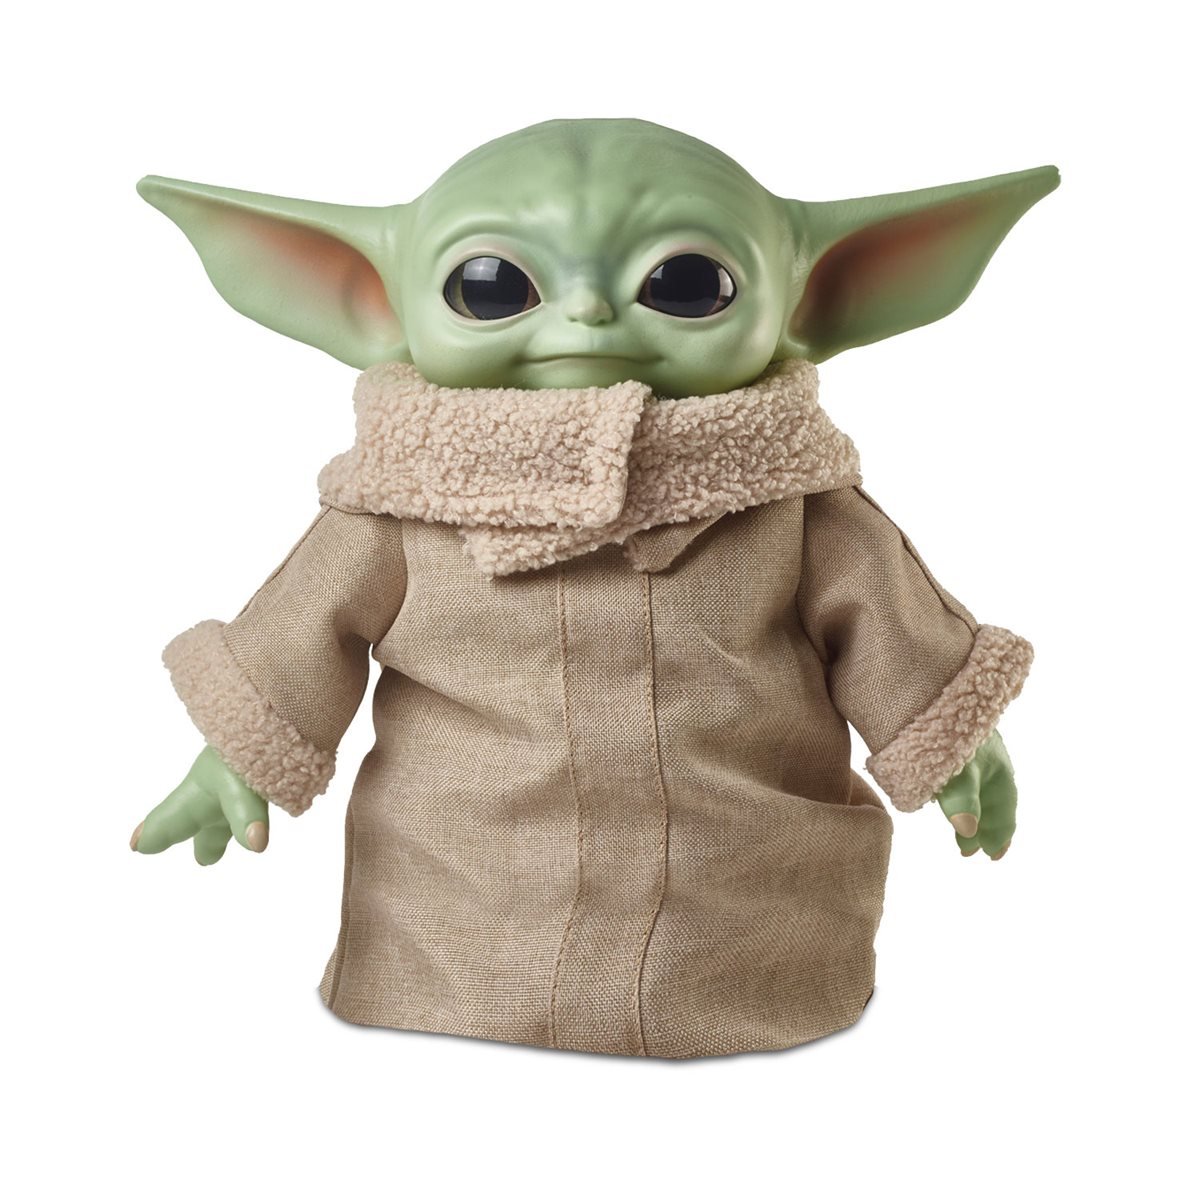 IN HAND * Mattel Star Wars The Mandalorian The Child Baby Yoda 11-Inch Plush 